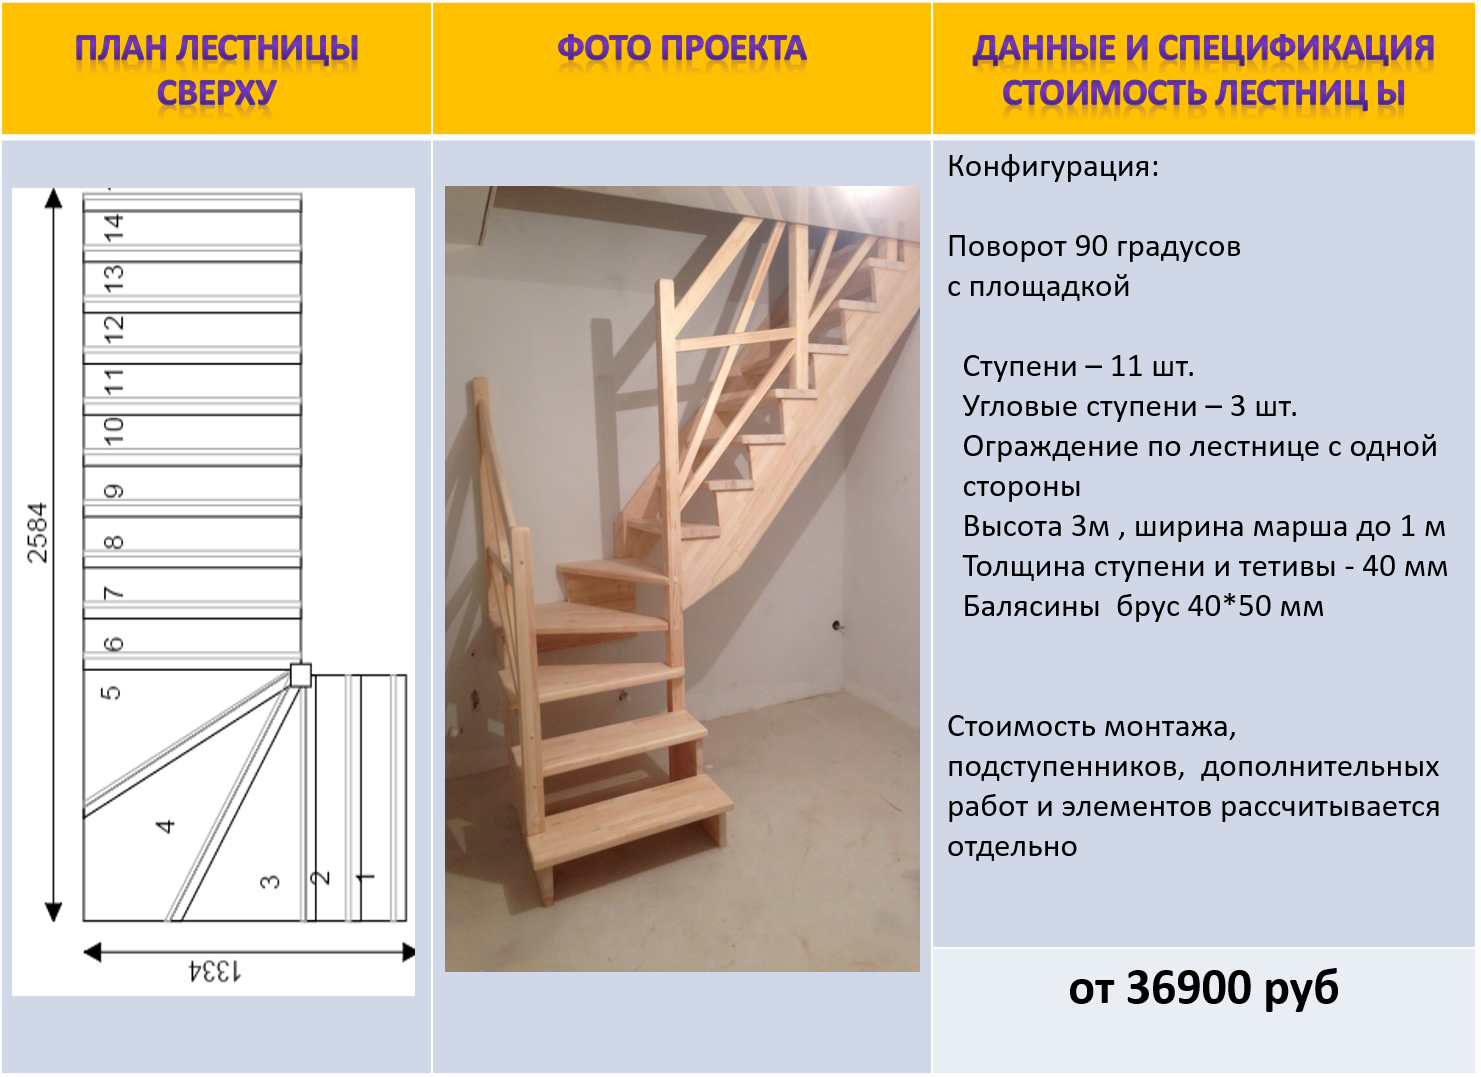 Сборка лестницы. Схема сборки лестницы. Сборка модульной лестницы. Схема сборки модульной лестницы. Инструкция сборки лестницы